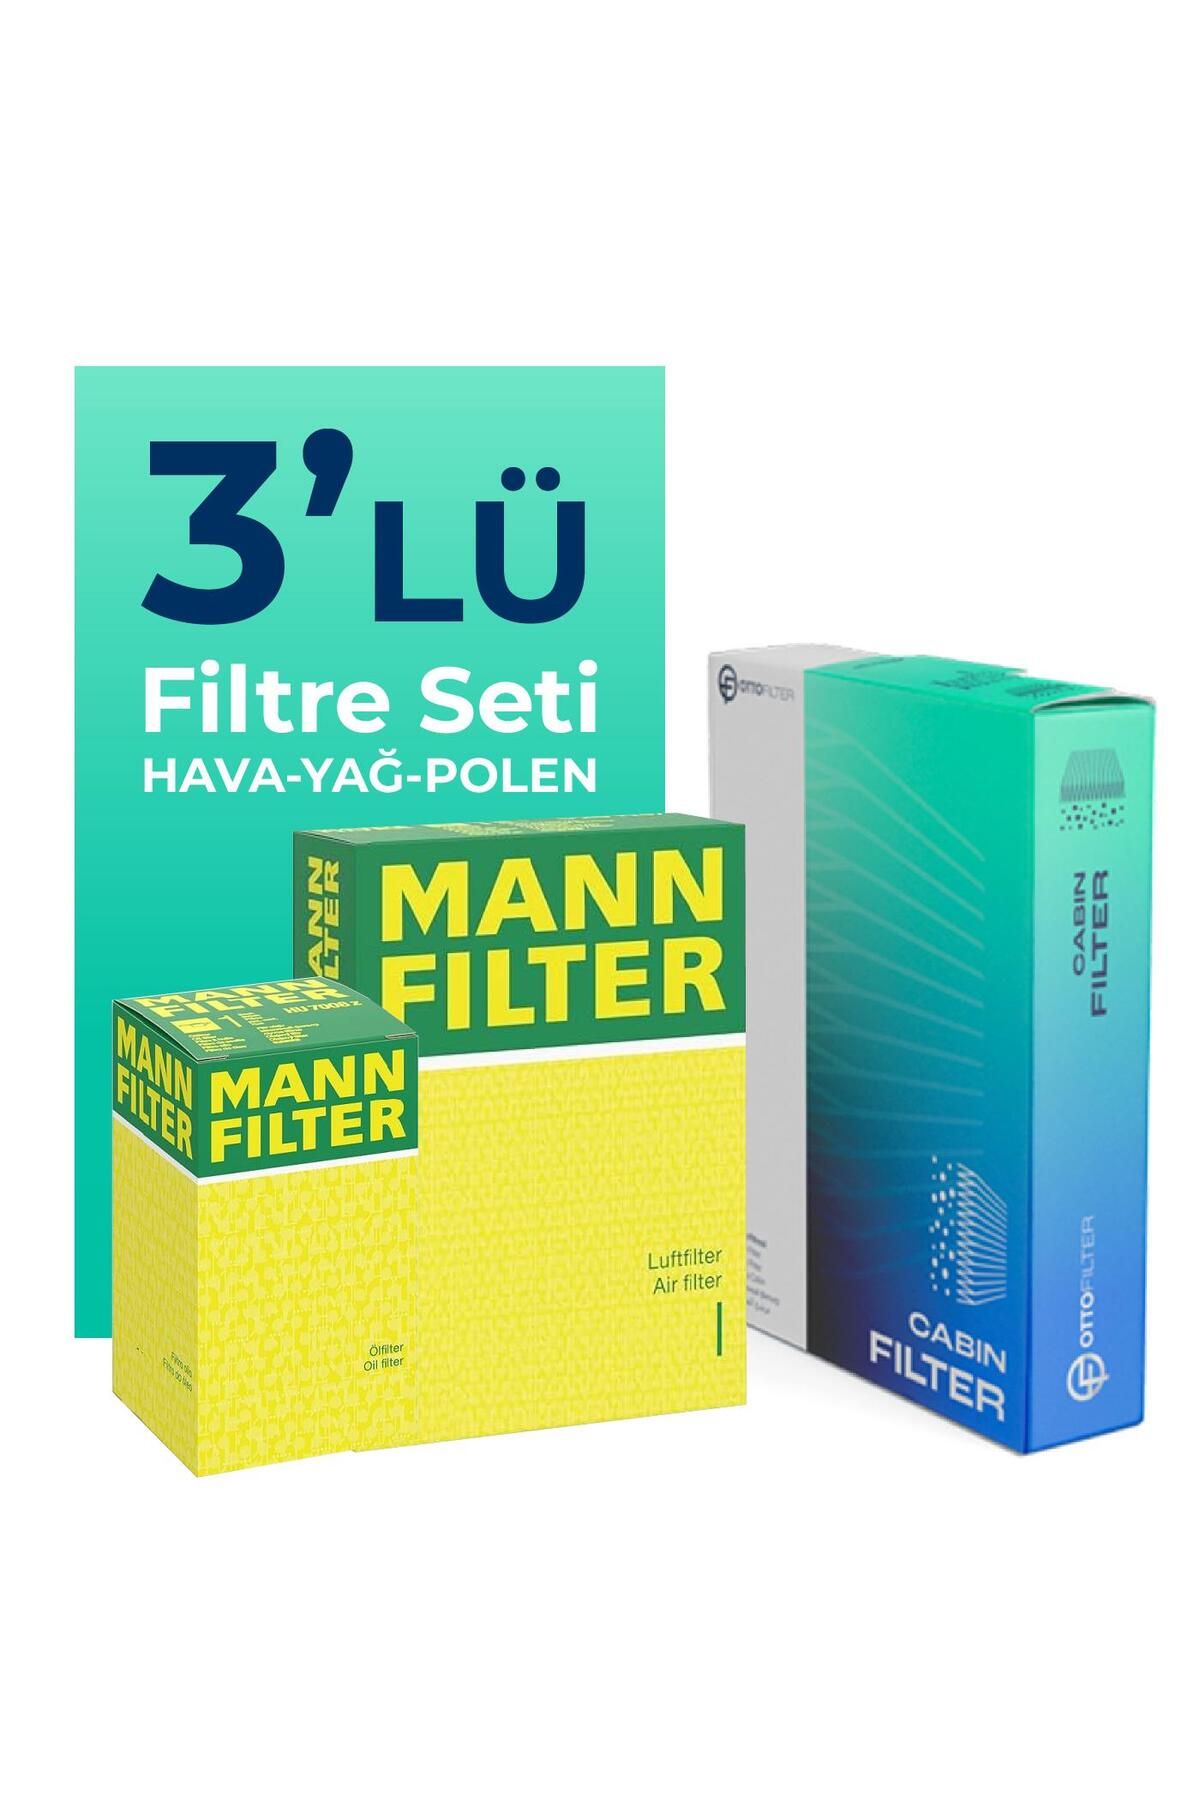 Mann Filter MANN Audi A6 3.0 TDI QUATRO 272 HP Filtre Seti (2014-2018) 3 lü